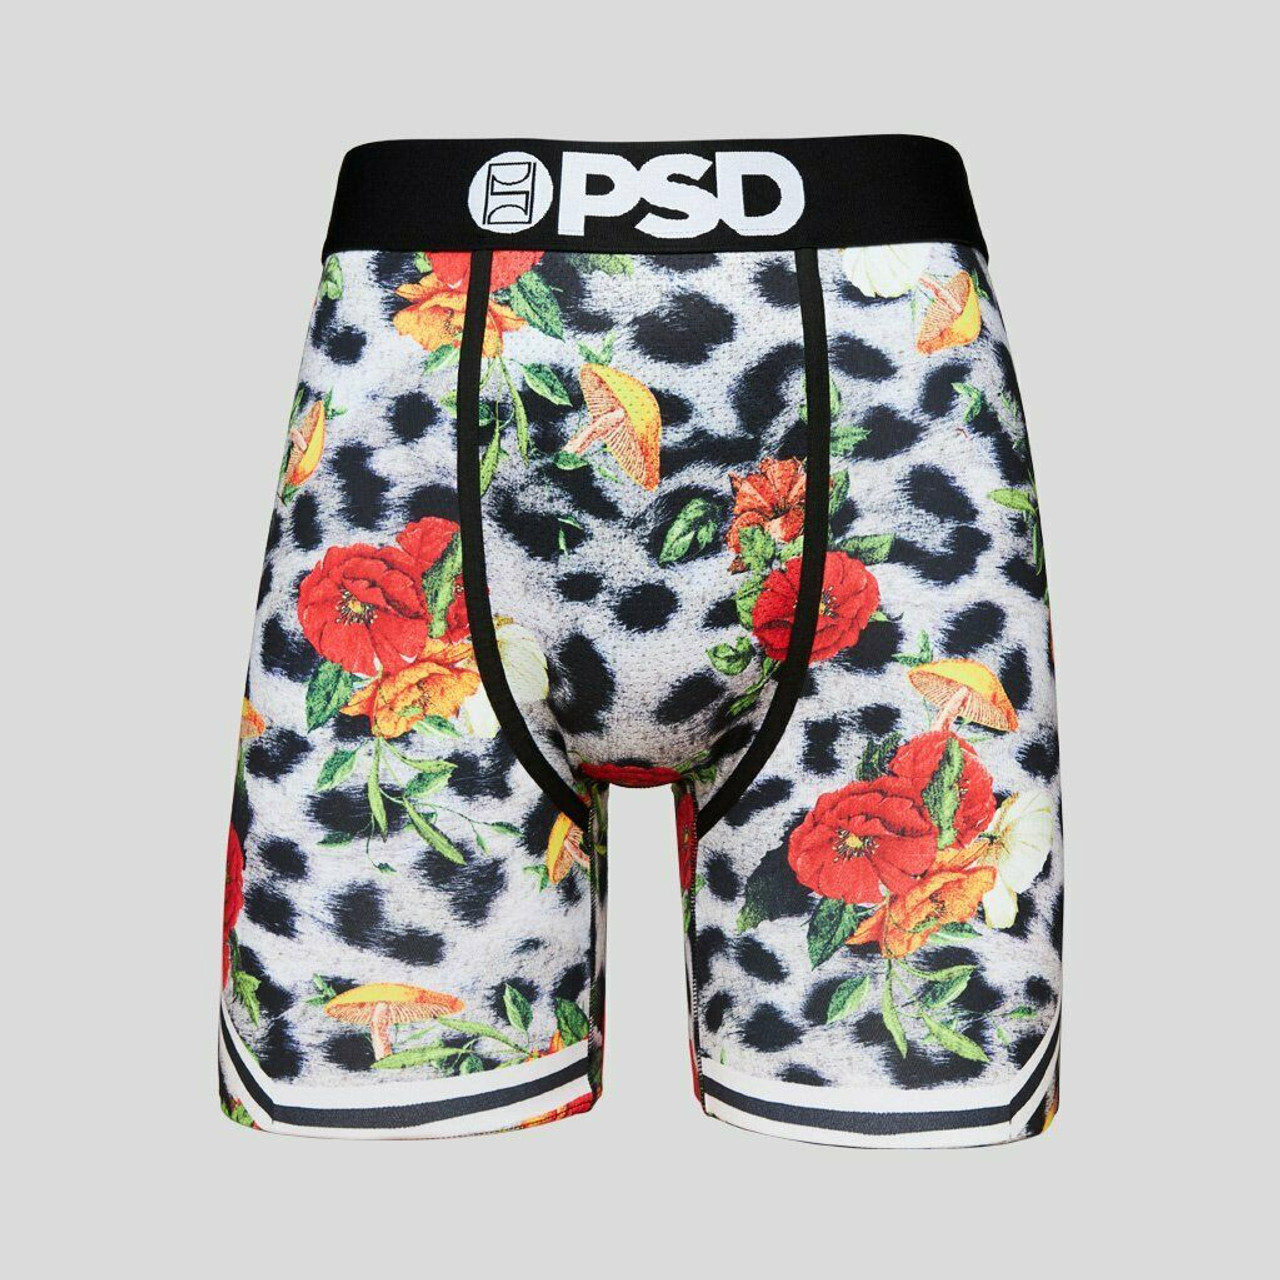 PSD Underwear (Best Quality & Pricing) - Bunch of Animals